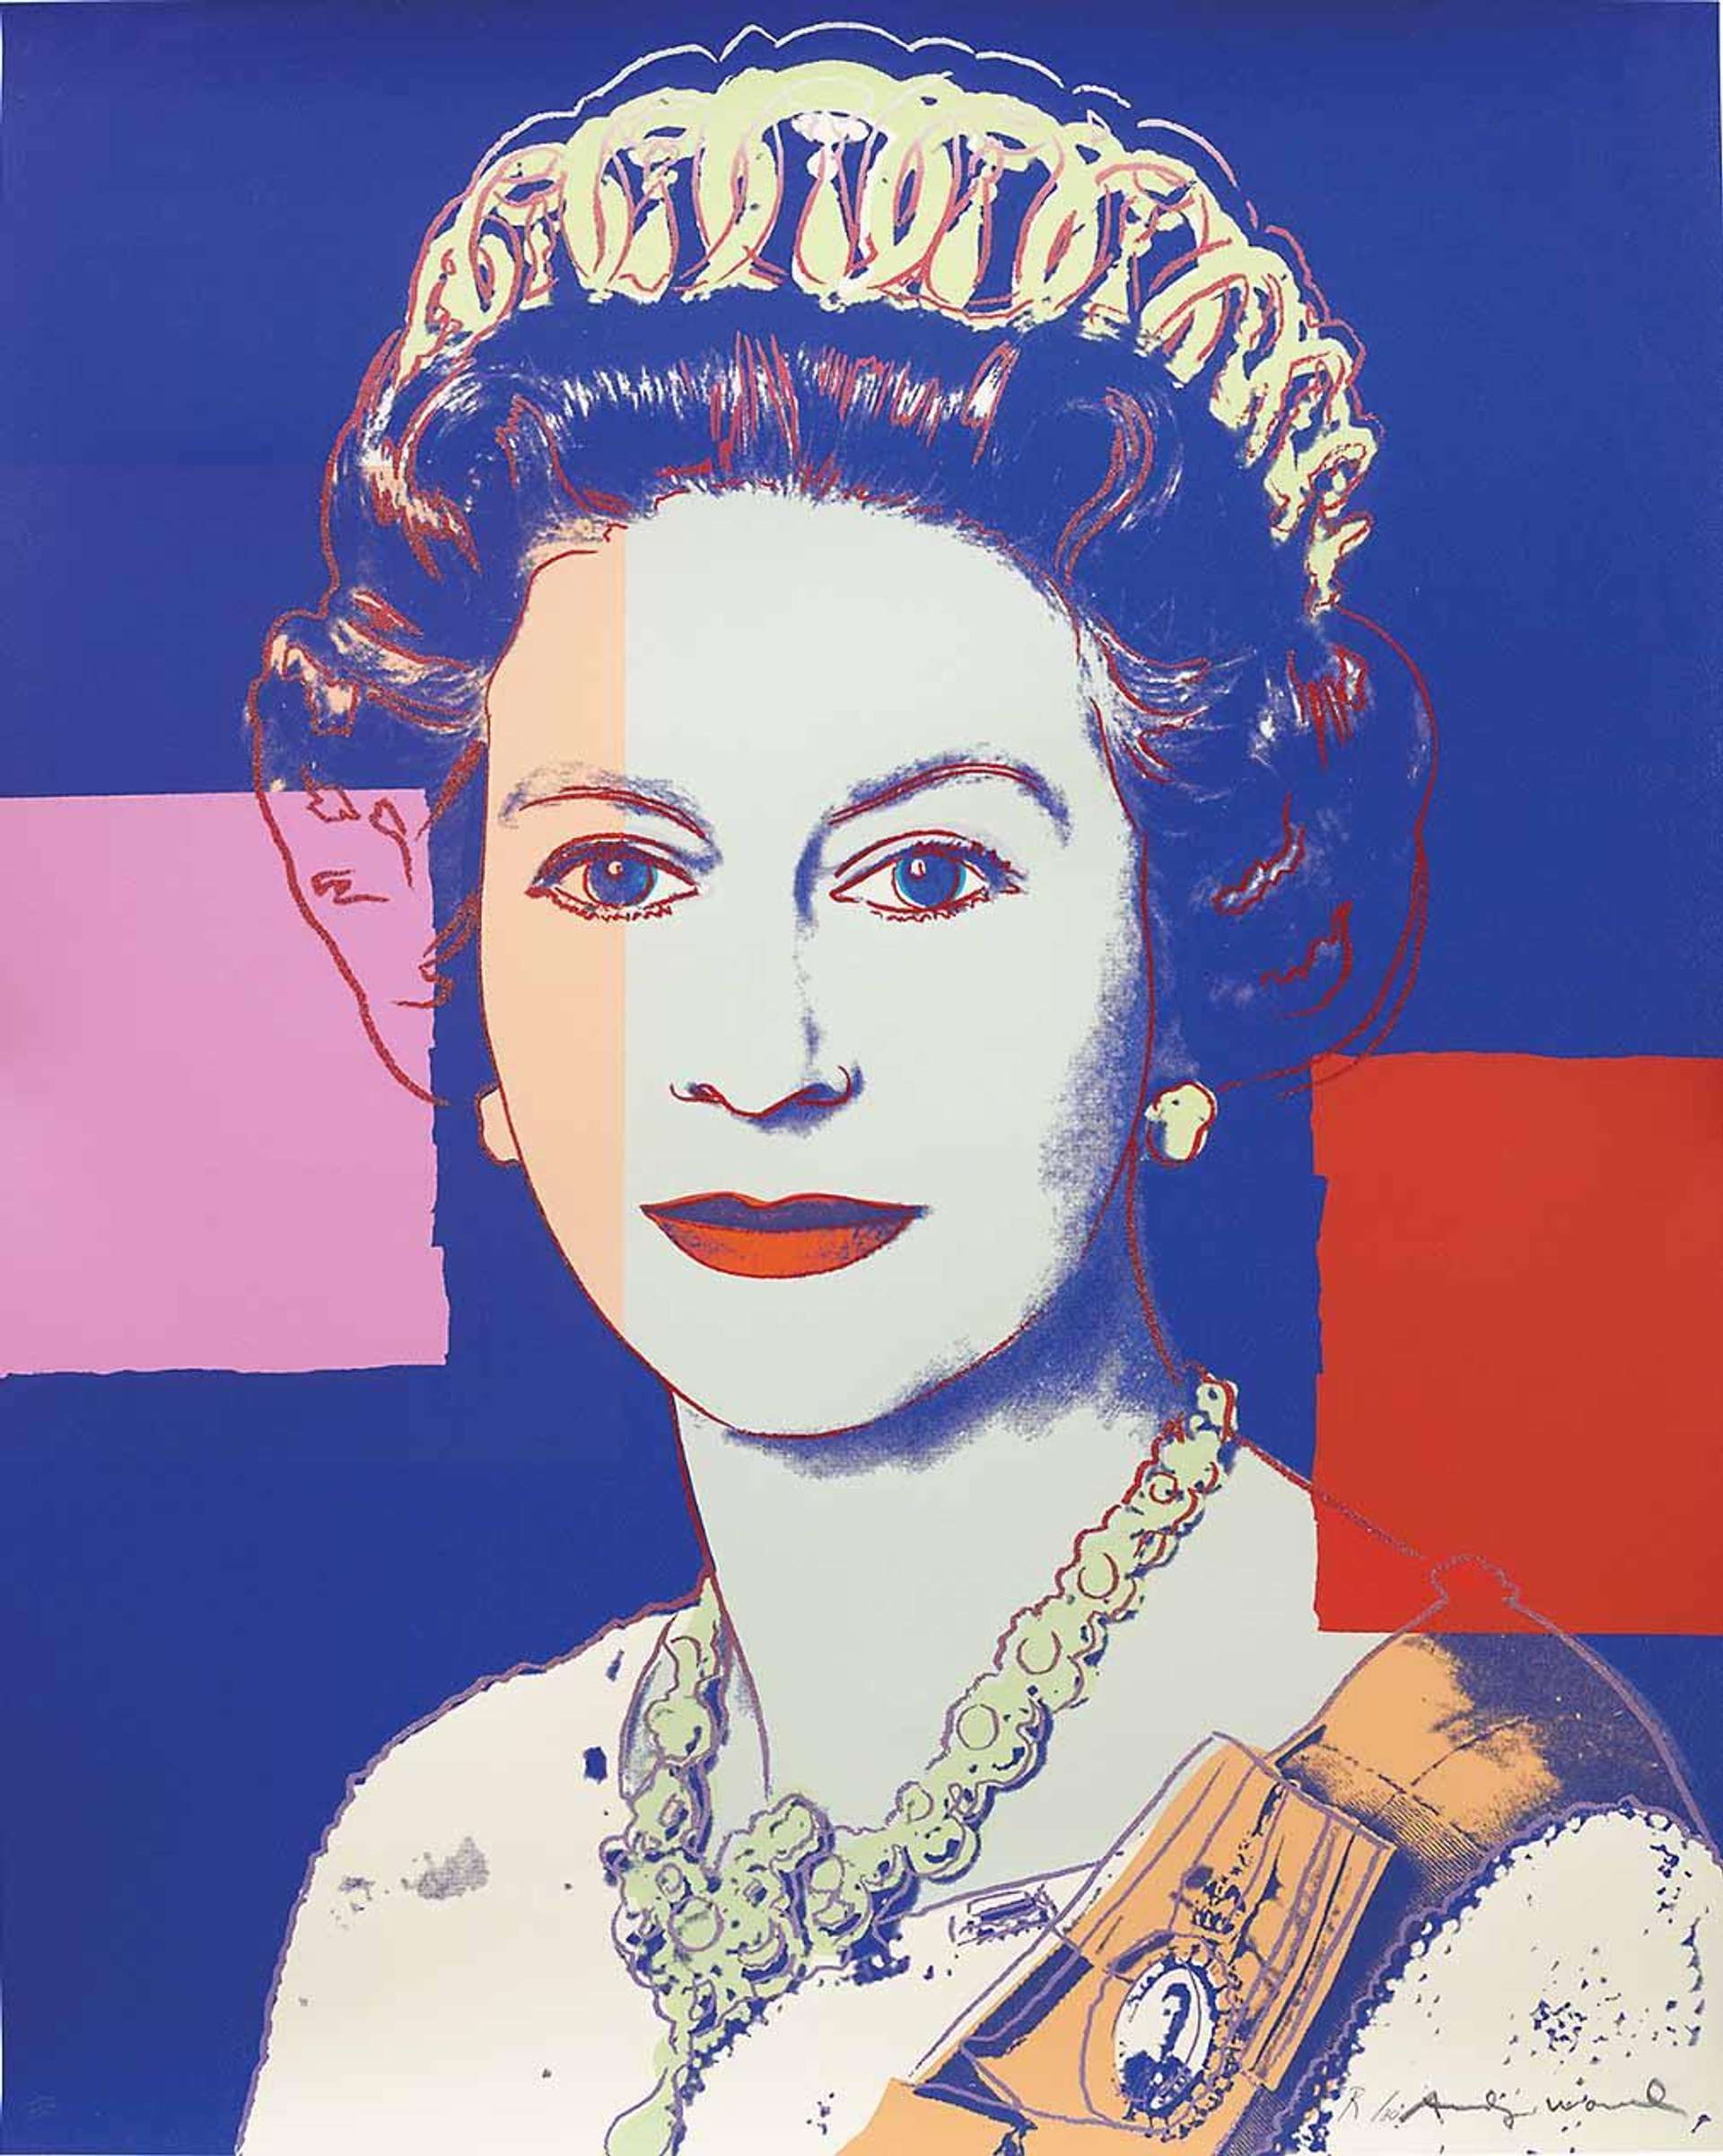 Queen Elizabeth II Royal Edition (F. & S. II.337A) - Signed Print by Andy Warhol 1985 - MyArtBroker